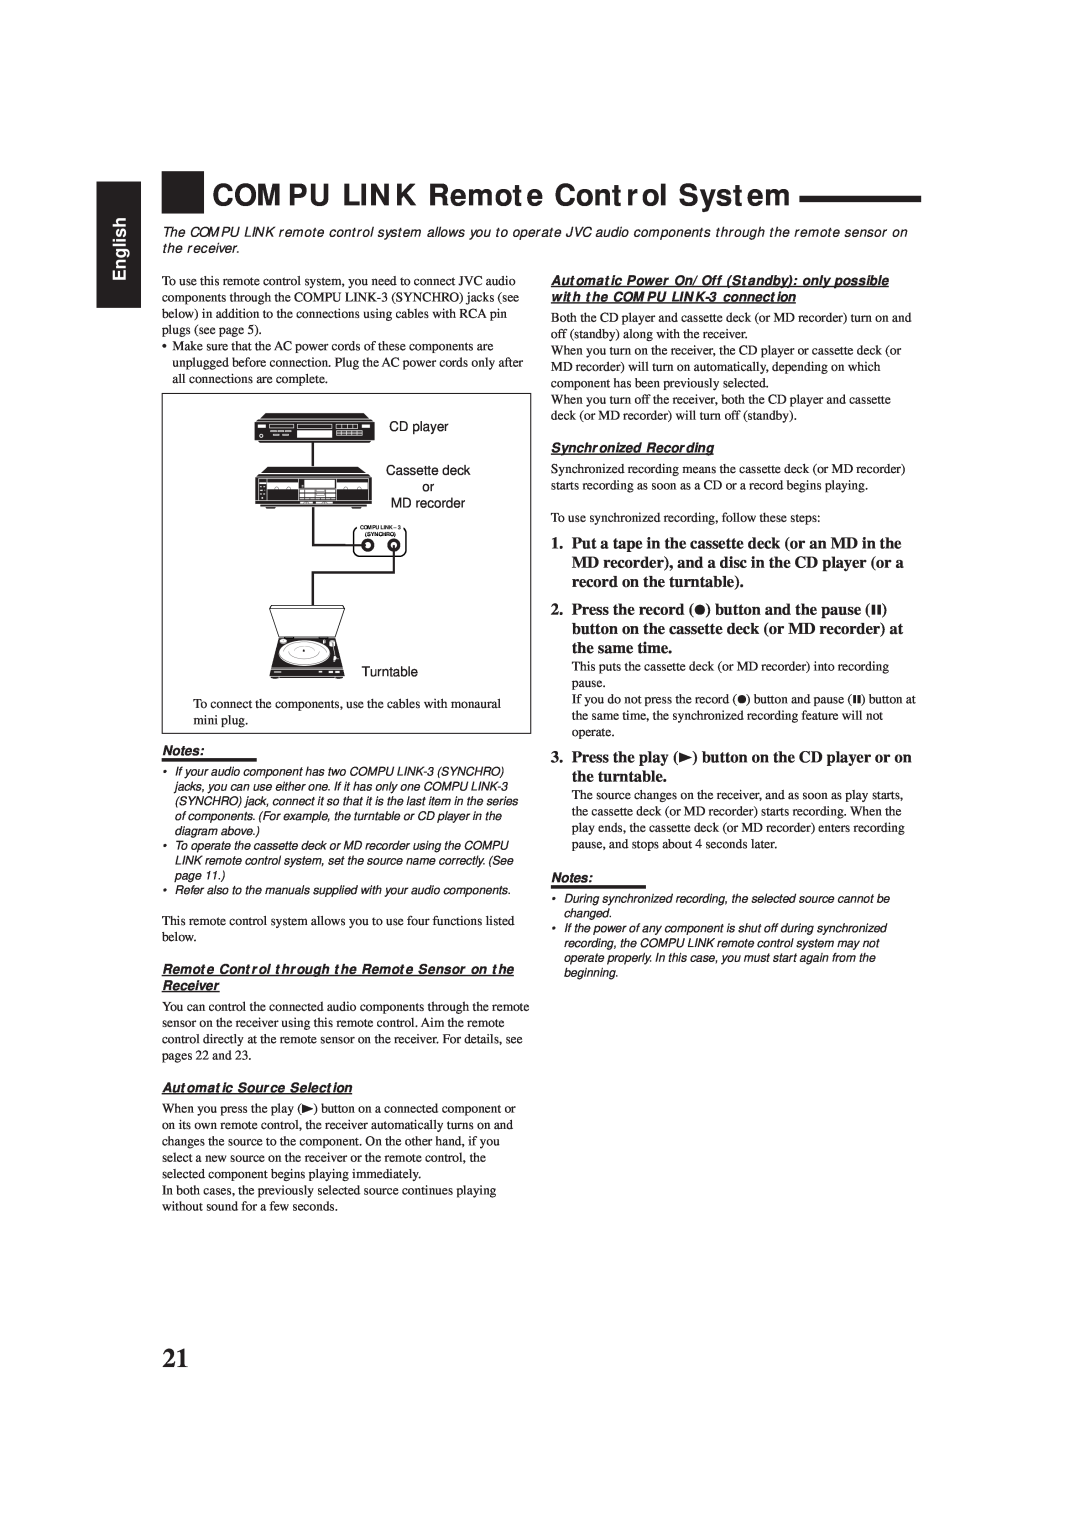 JVC RX-5001VGD manual COMPU LINK Remote Control System, English 